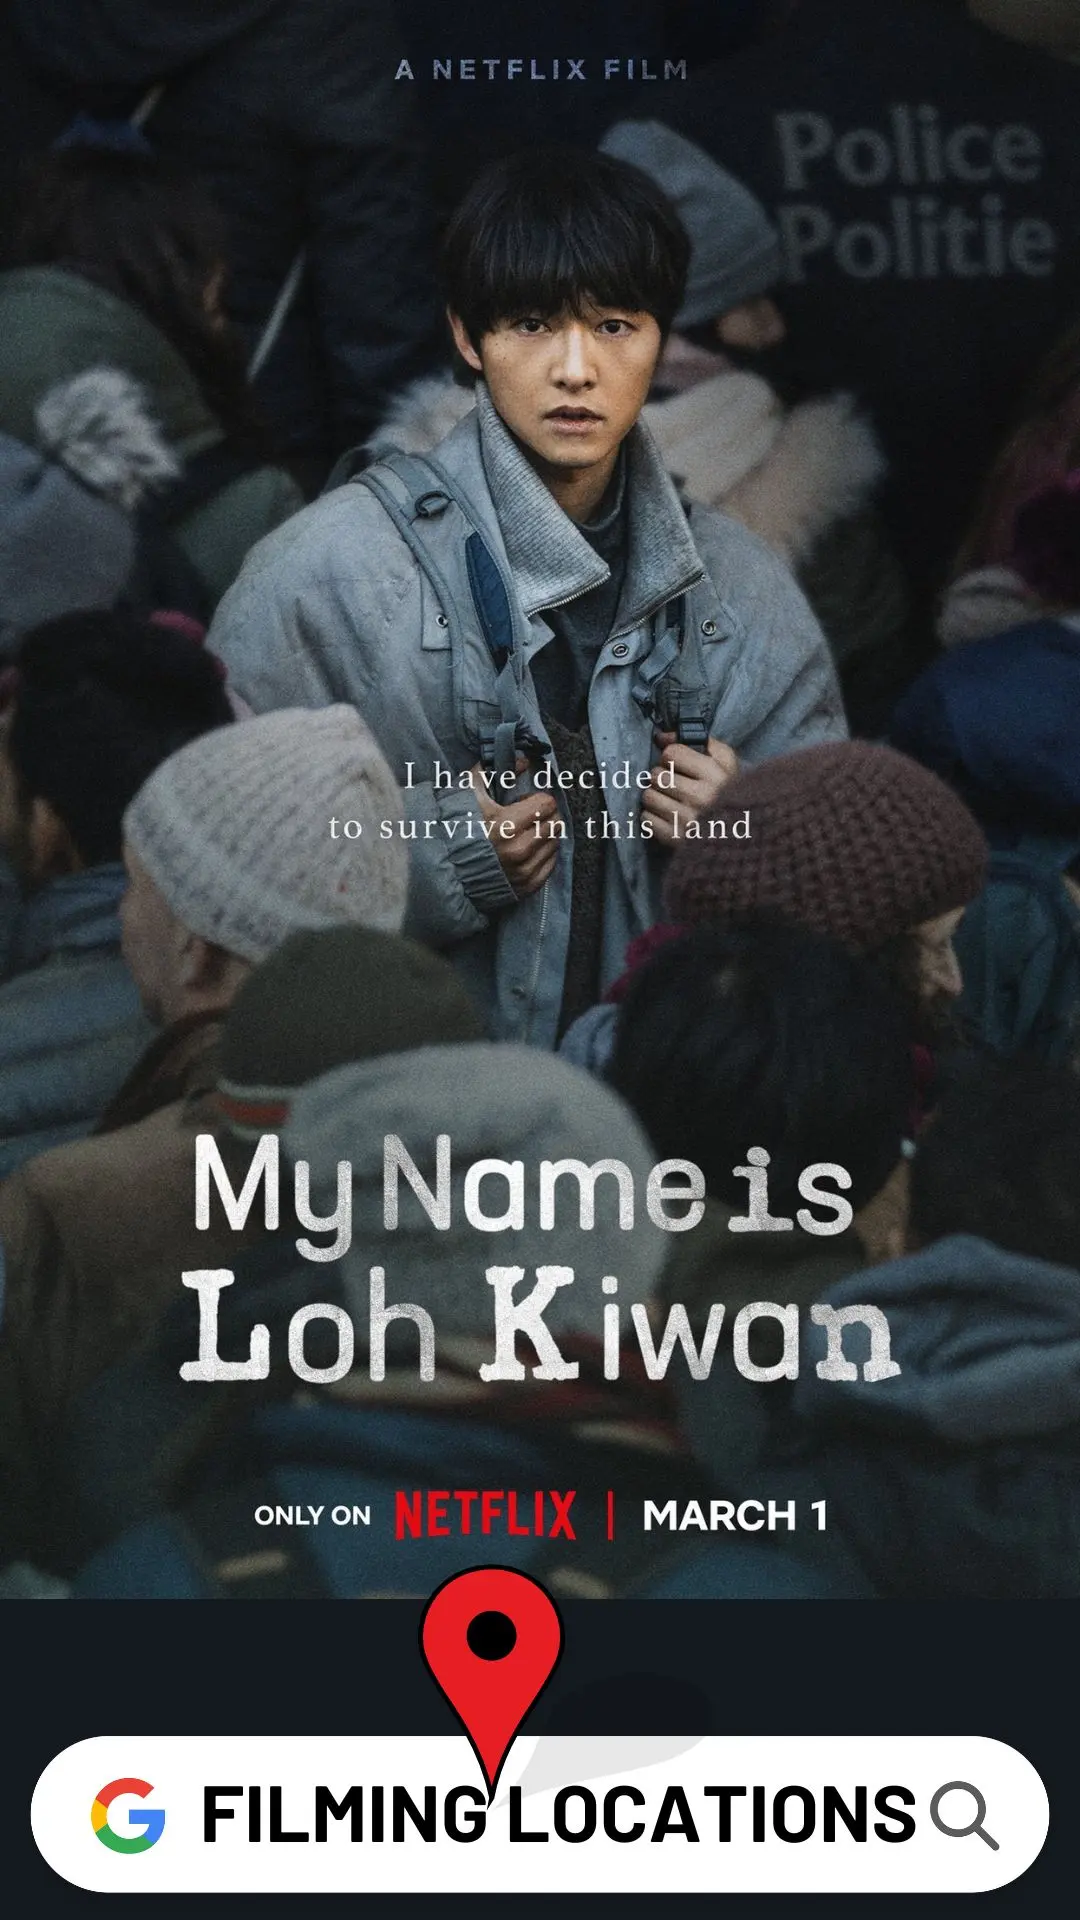 My Name is Loh Kiwan Filming Locations